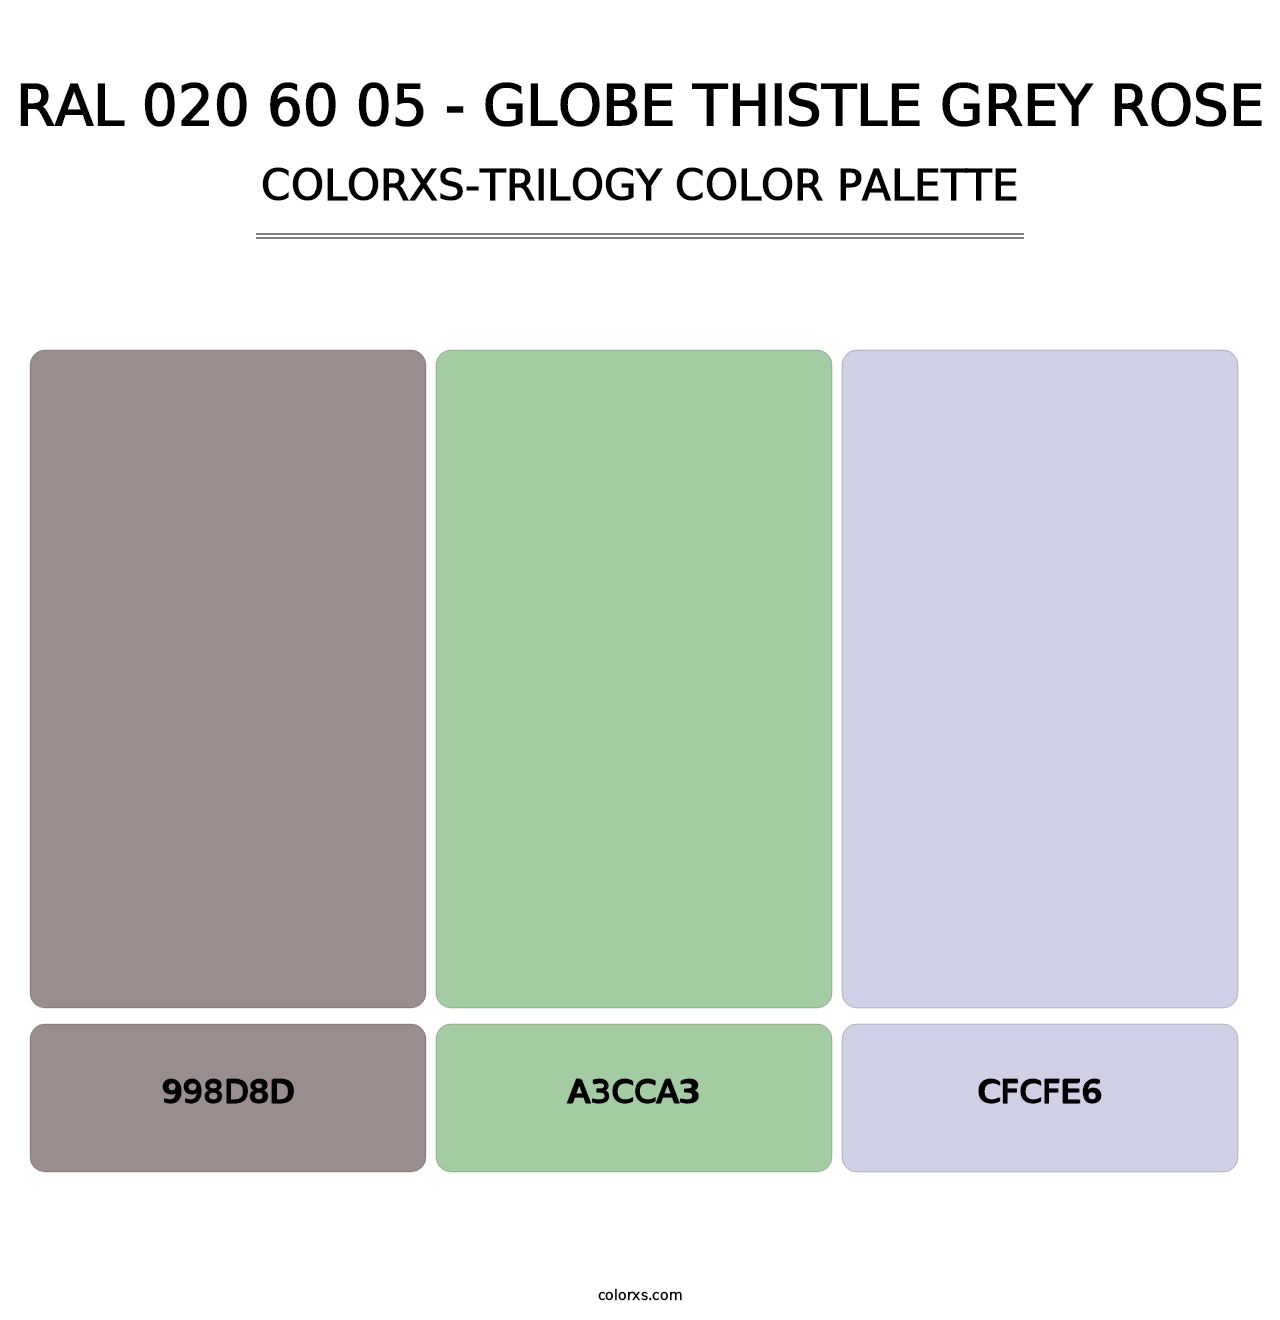 RAL 020 60 05 - Globe Thistle Grey Rose - Colorxs Trilogy Palette